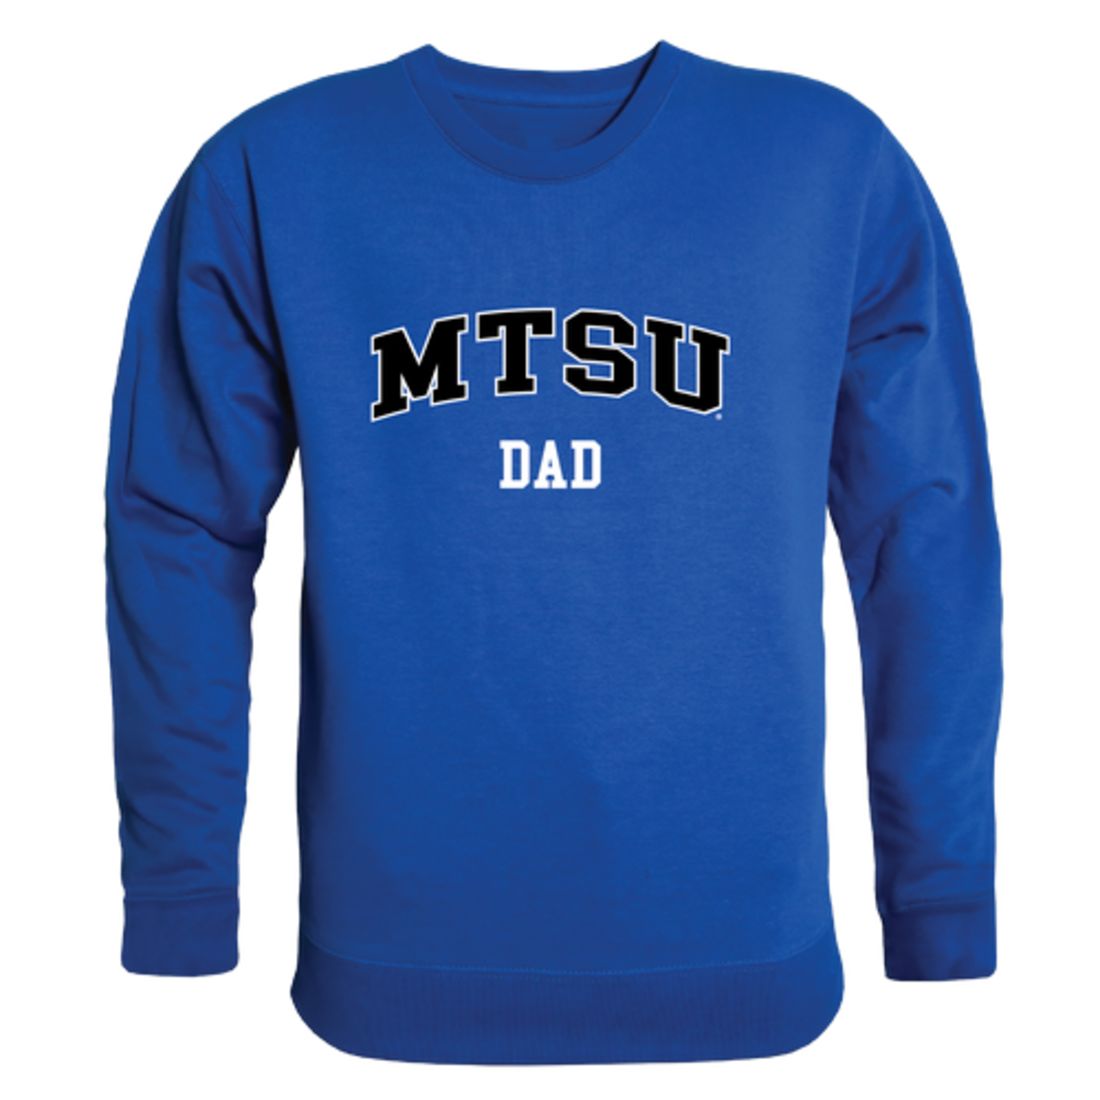 Middle Tennessee State University Blue Raiders Dad Fleece Crewneck Pullover Sweatshirt